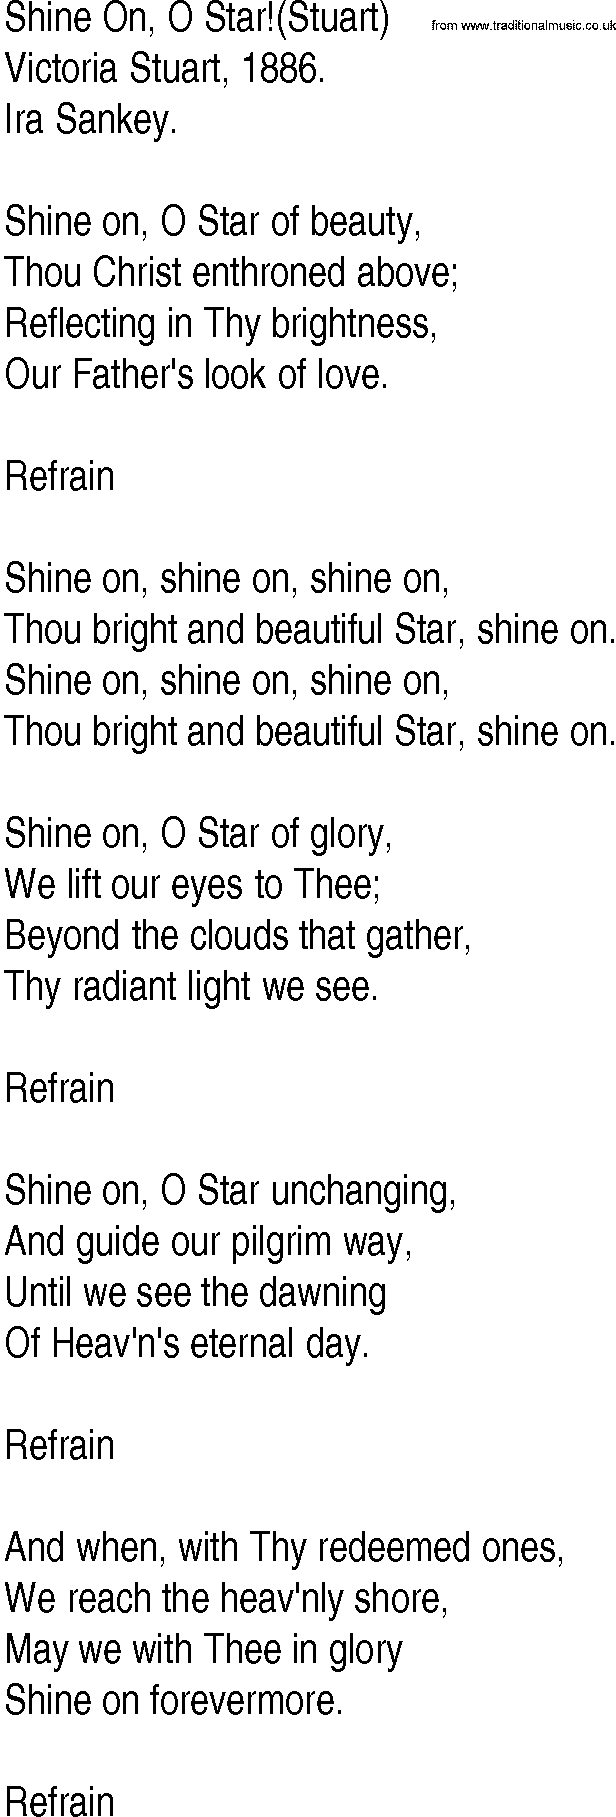 Hymn and Gospel Song: Shine On, O Star!(Stuart) by Victoria Stuart lyrics